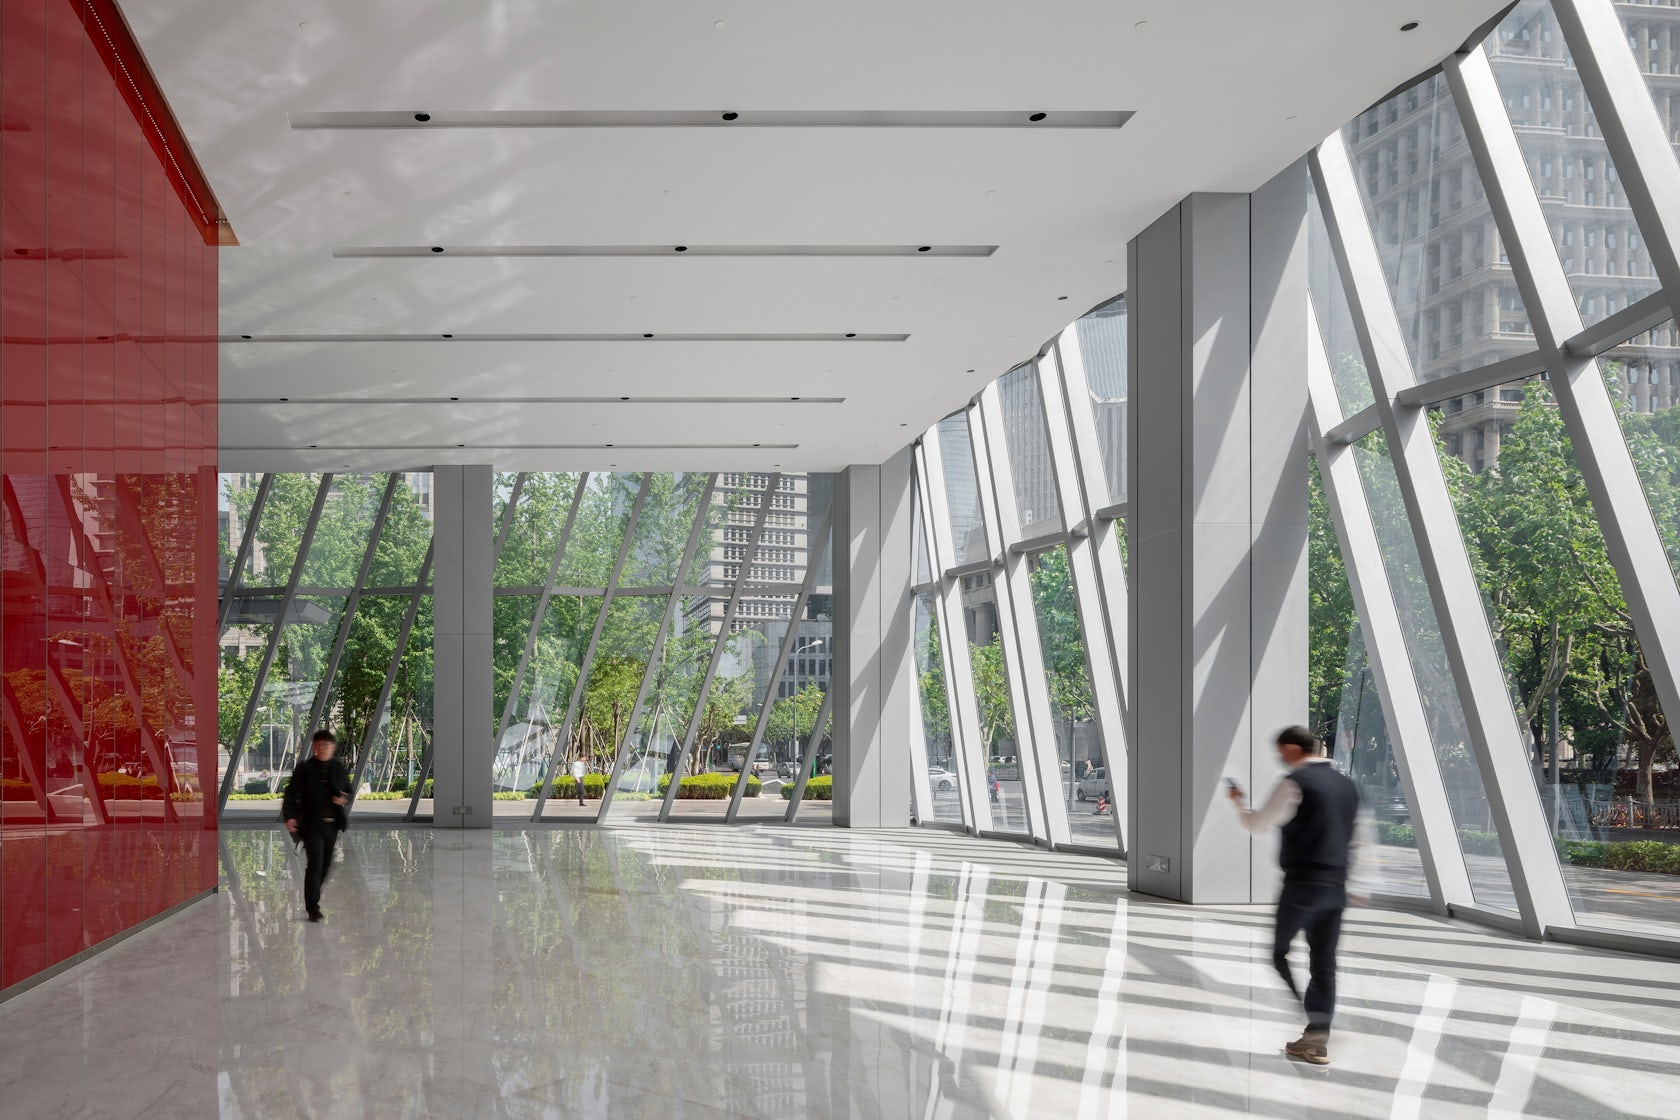 Foxconn Headquarters Shanghai By Kris Yao Artech Architizer